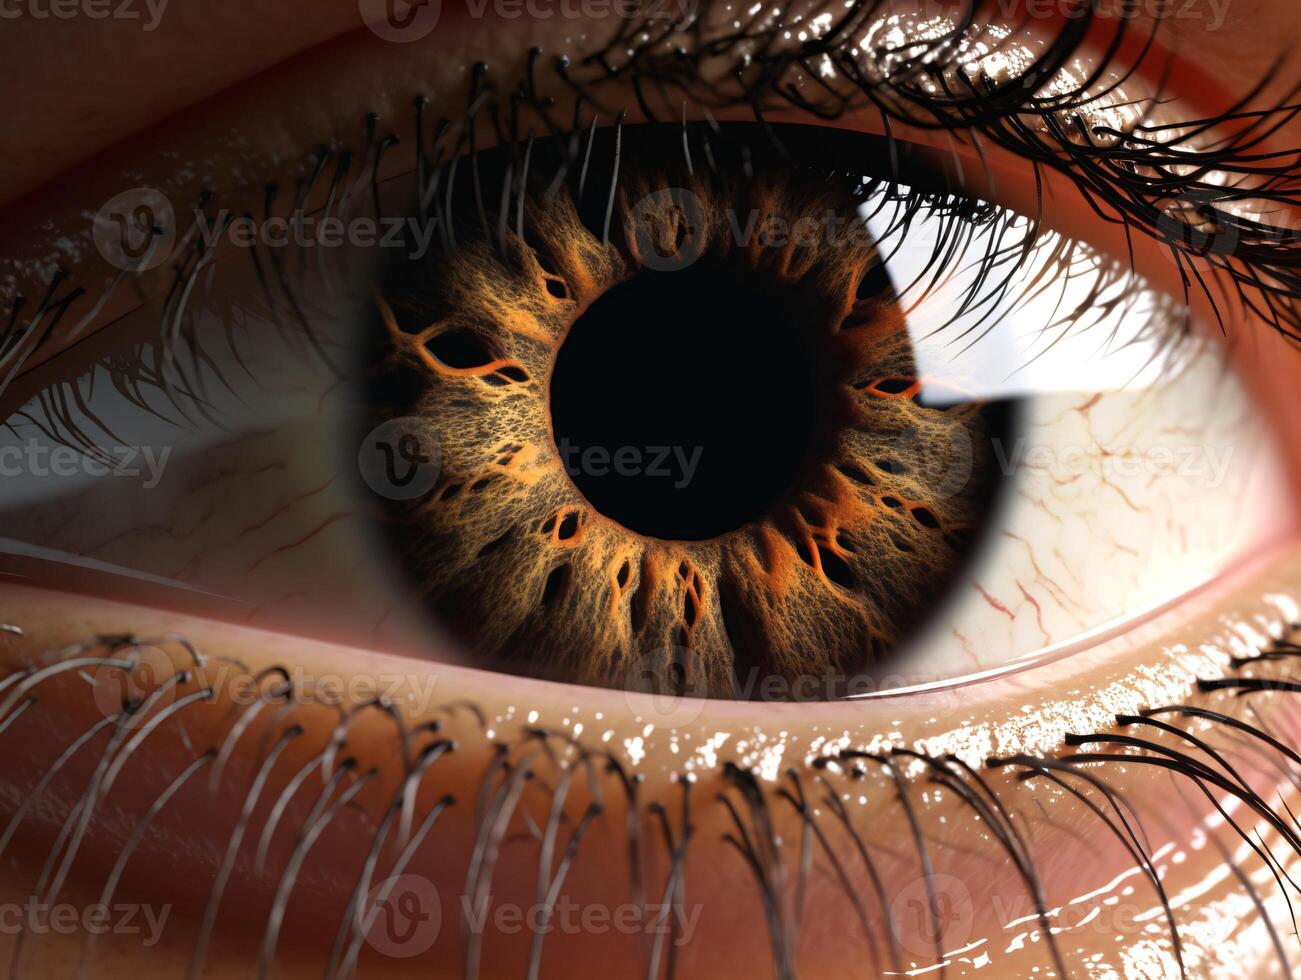 AI generated Close up of human eye. photo